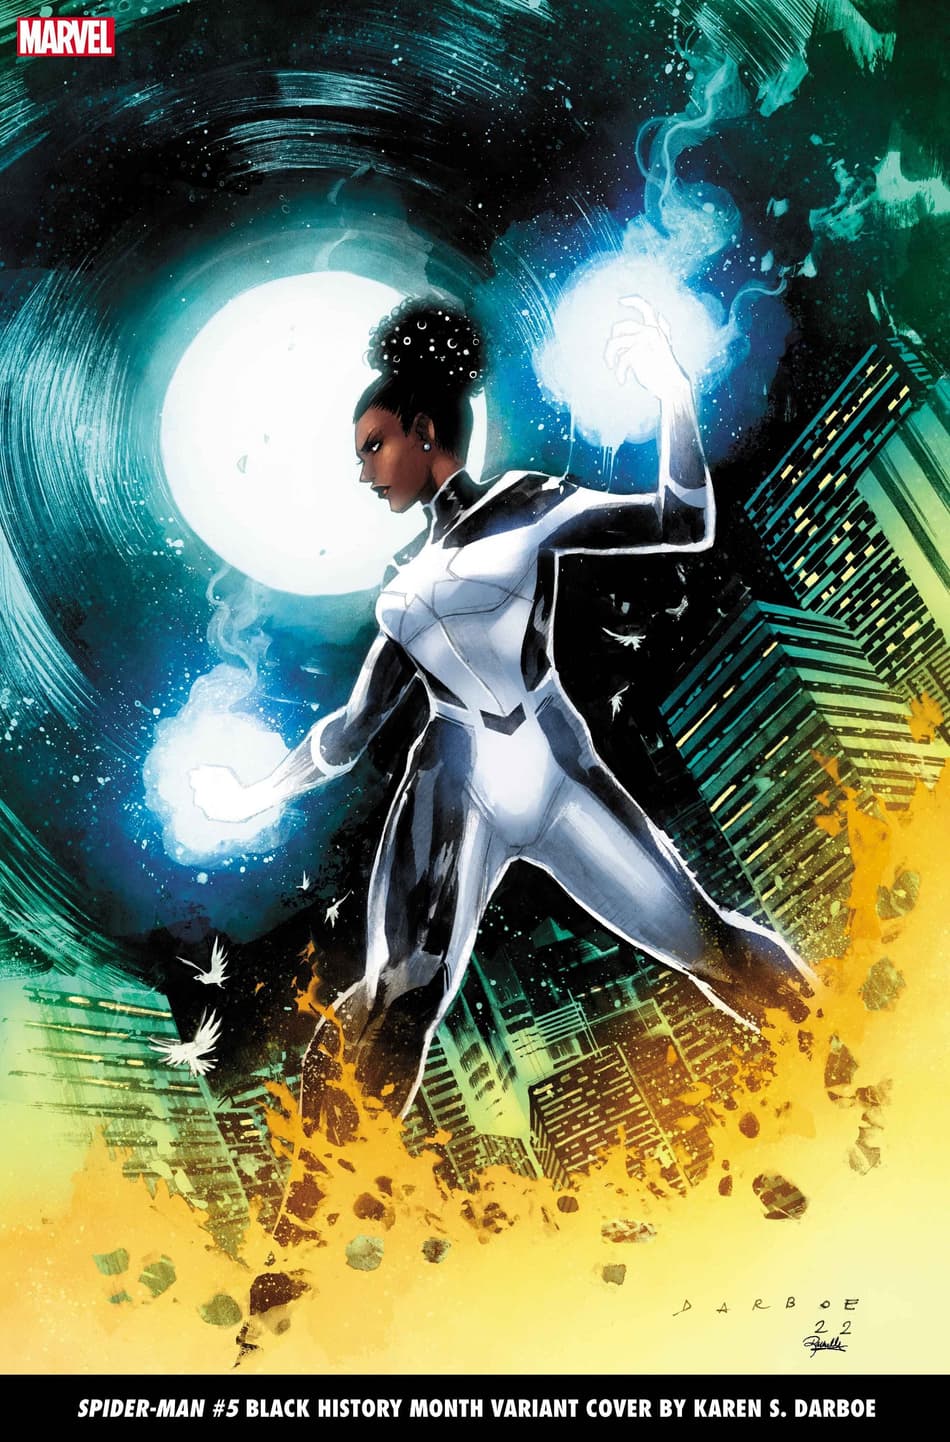 SPIDER-MAN (2022) #5 Black History Month variant cover by Karen S. Darboe.